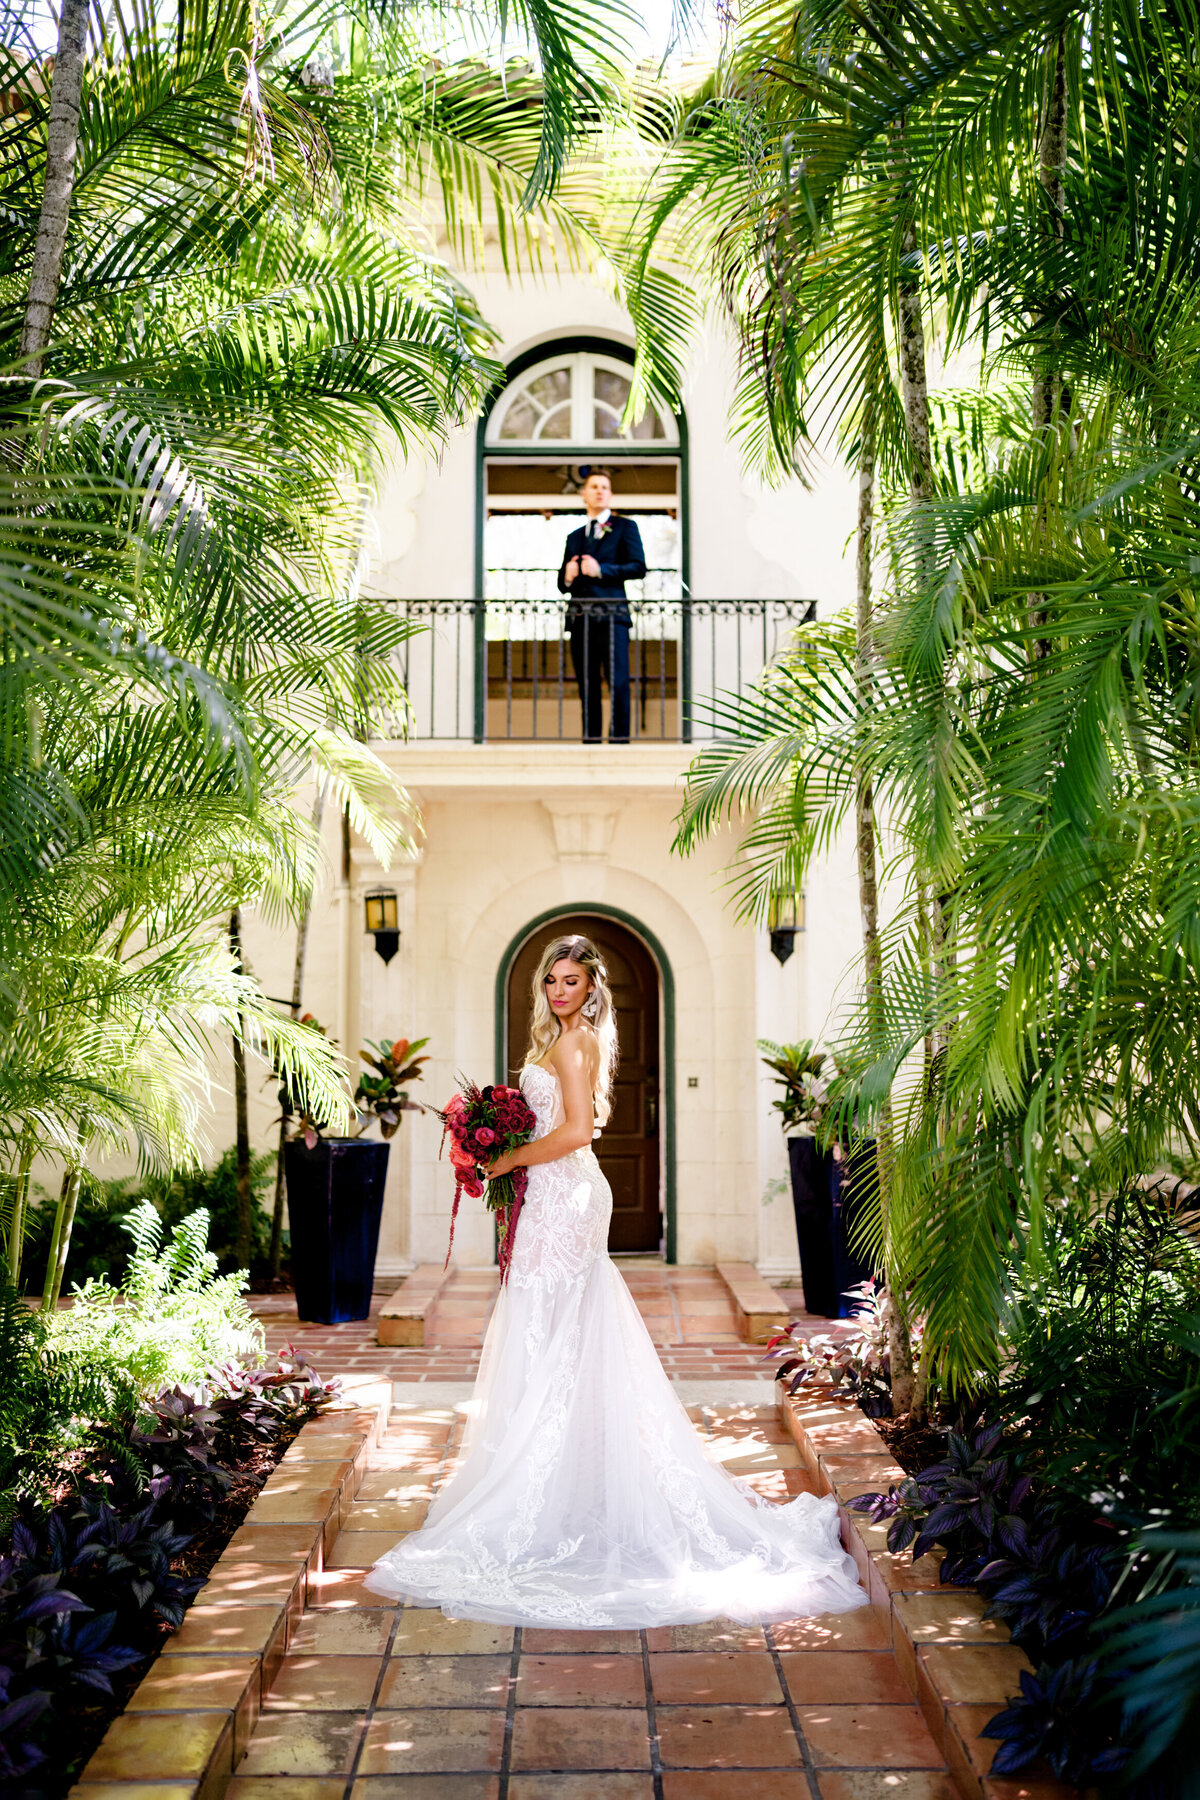 Aspen-Avenue-Florida-Wedding-Photographer-Miami-Villa-Woodbine-Dorasasu-Doll-Haus-Glam-Intrigue-Design-Unique-Colorful-Bride-Groom-Elegant-Luxury